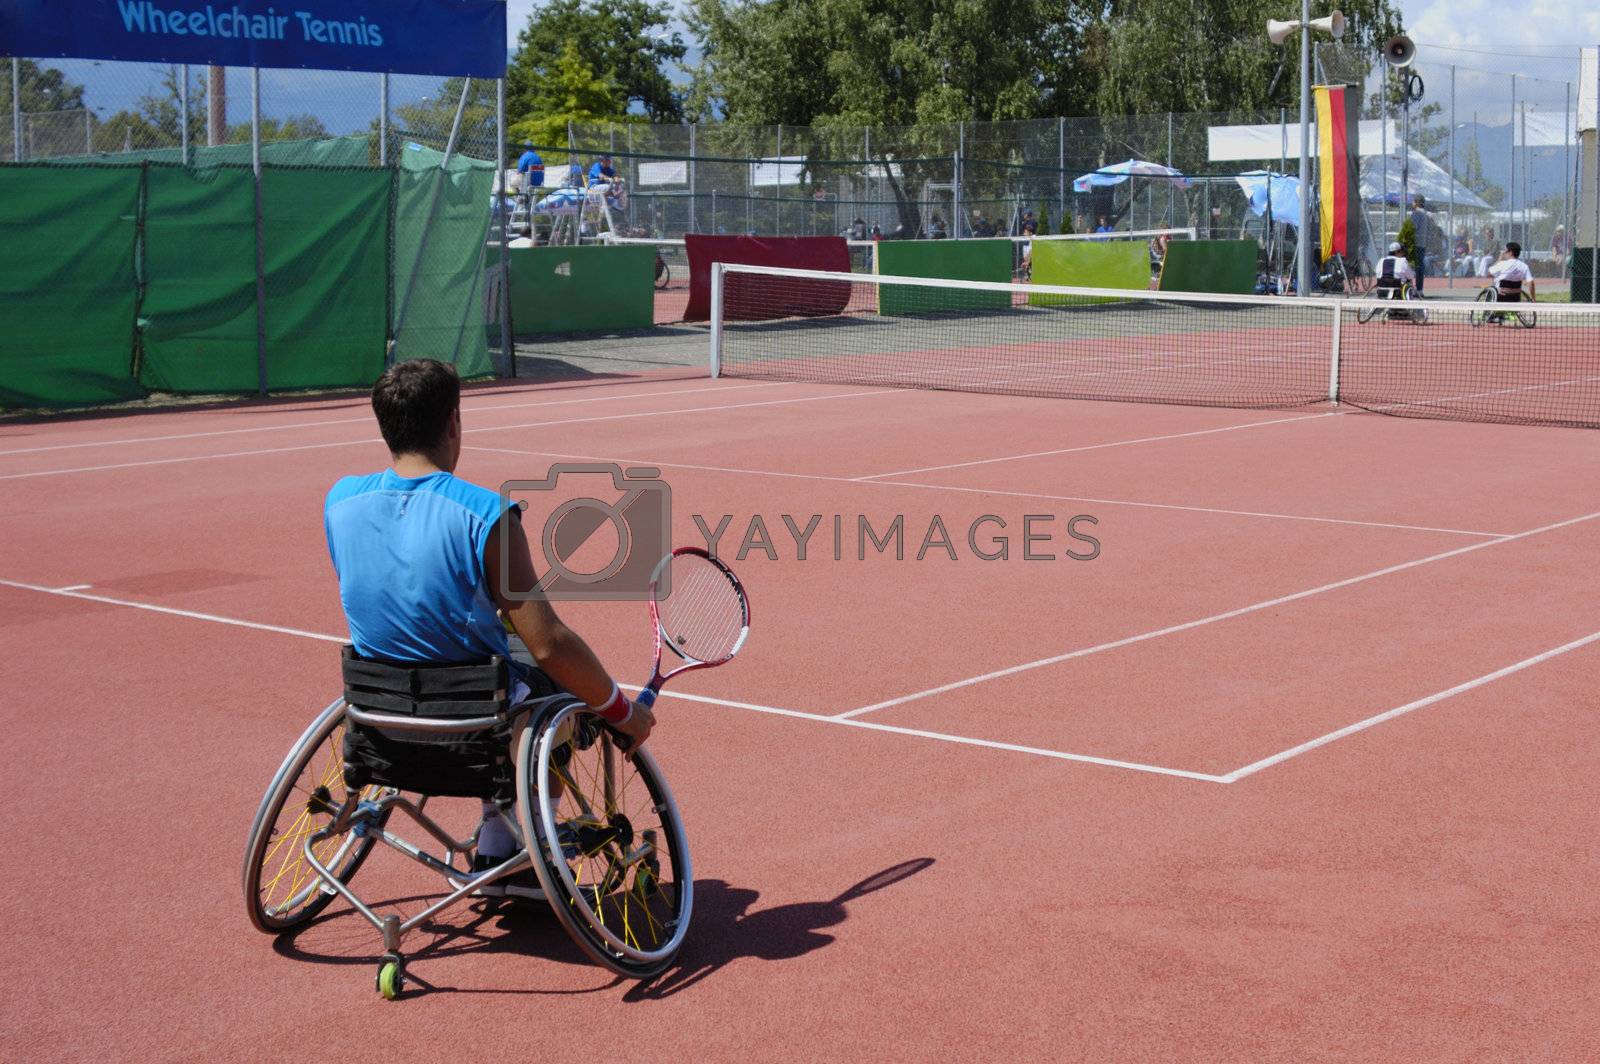 Royalty free image of Wheelchair tennis by Bateleur